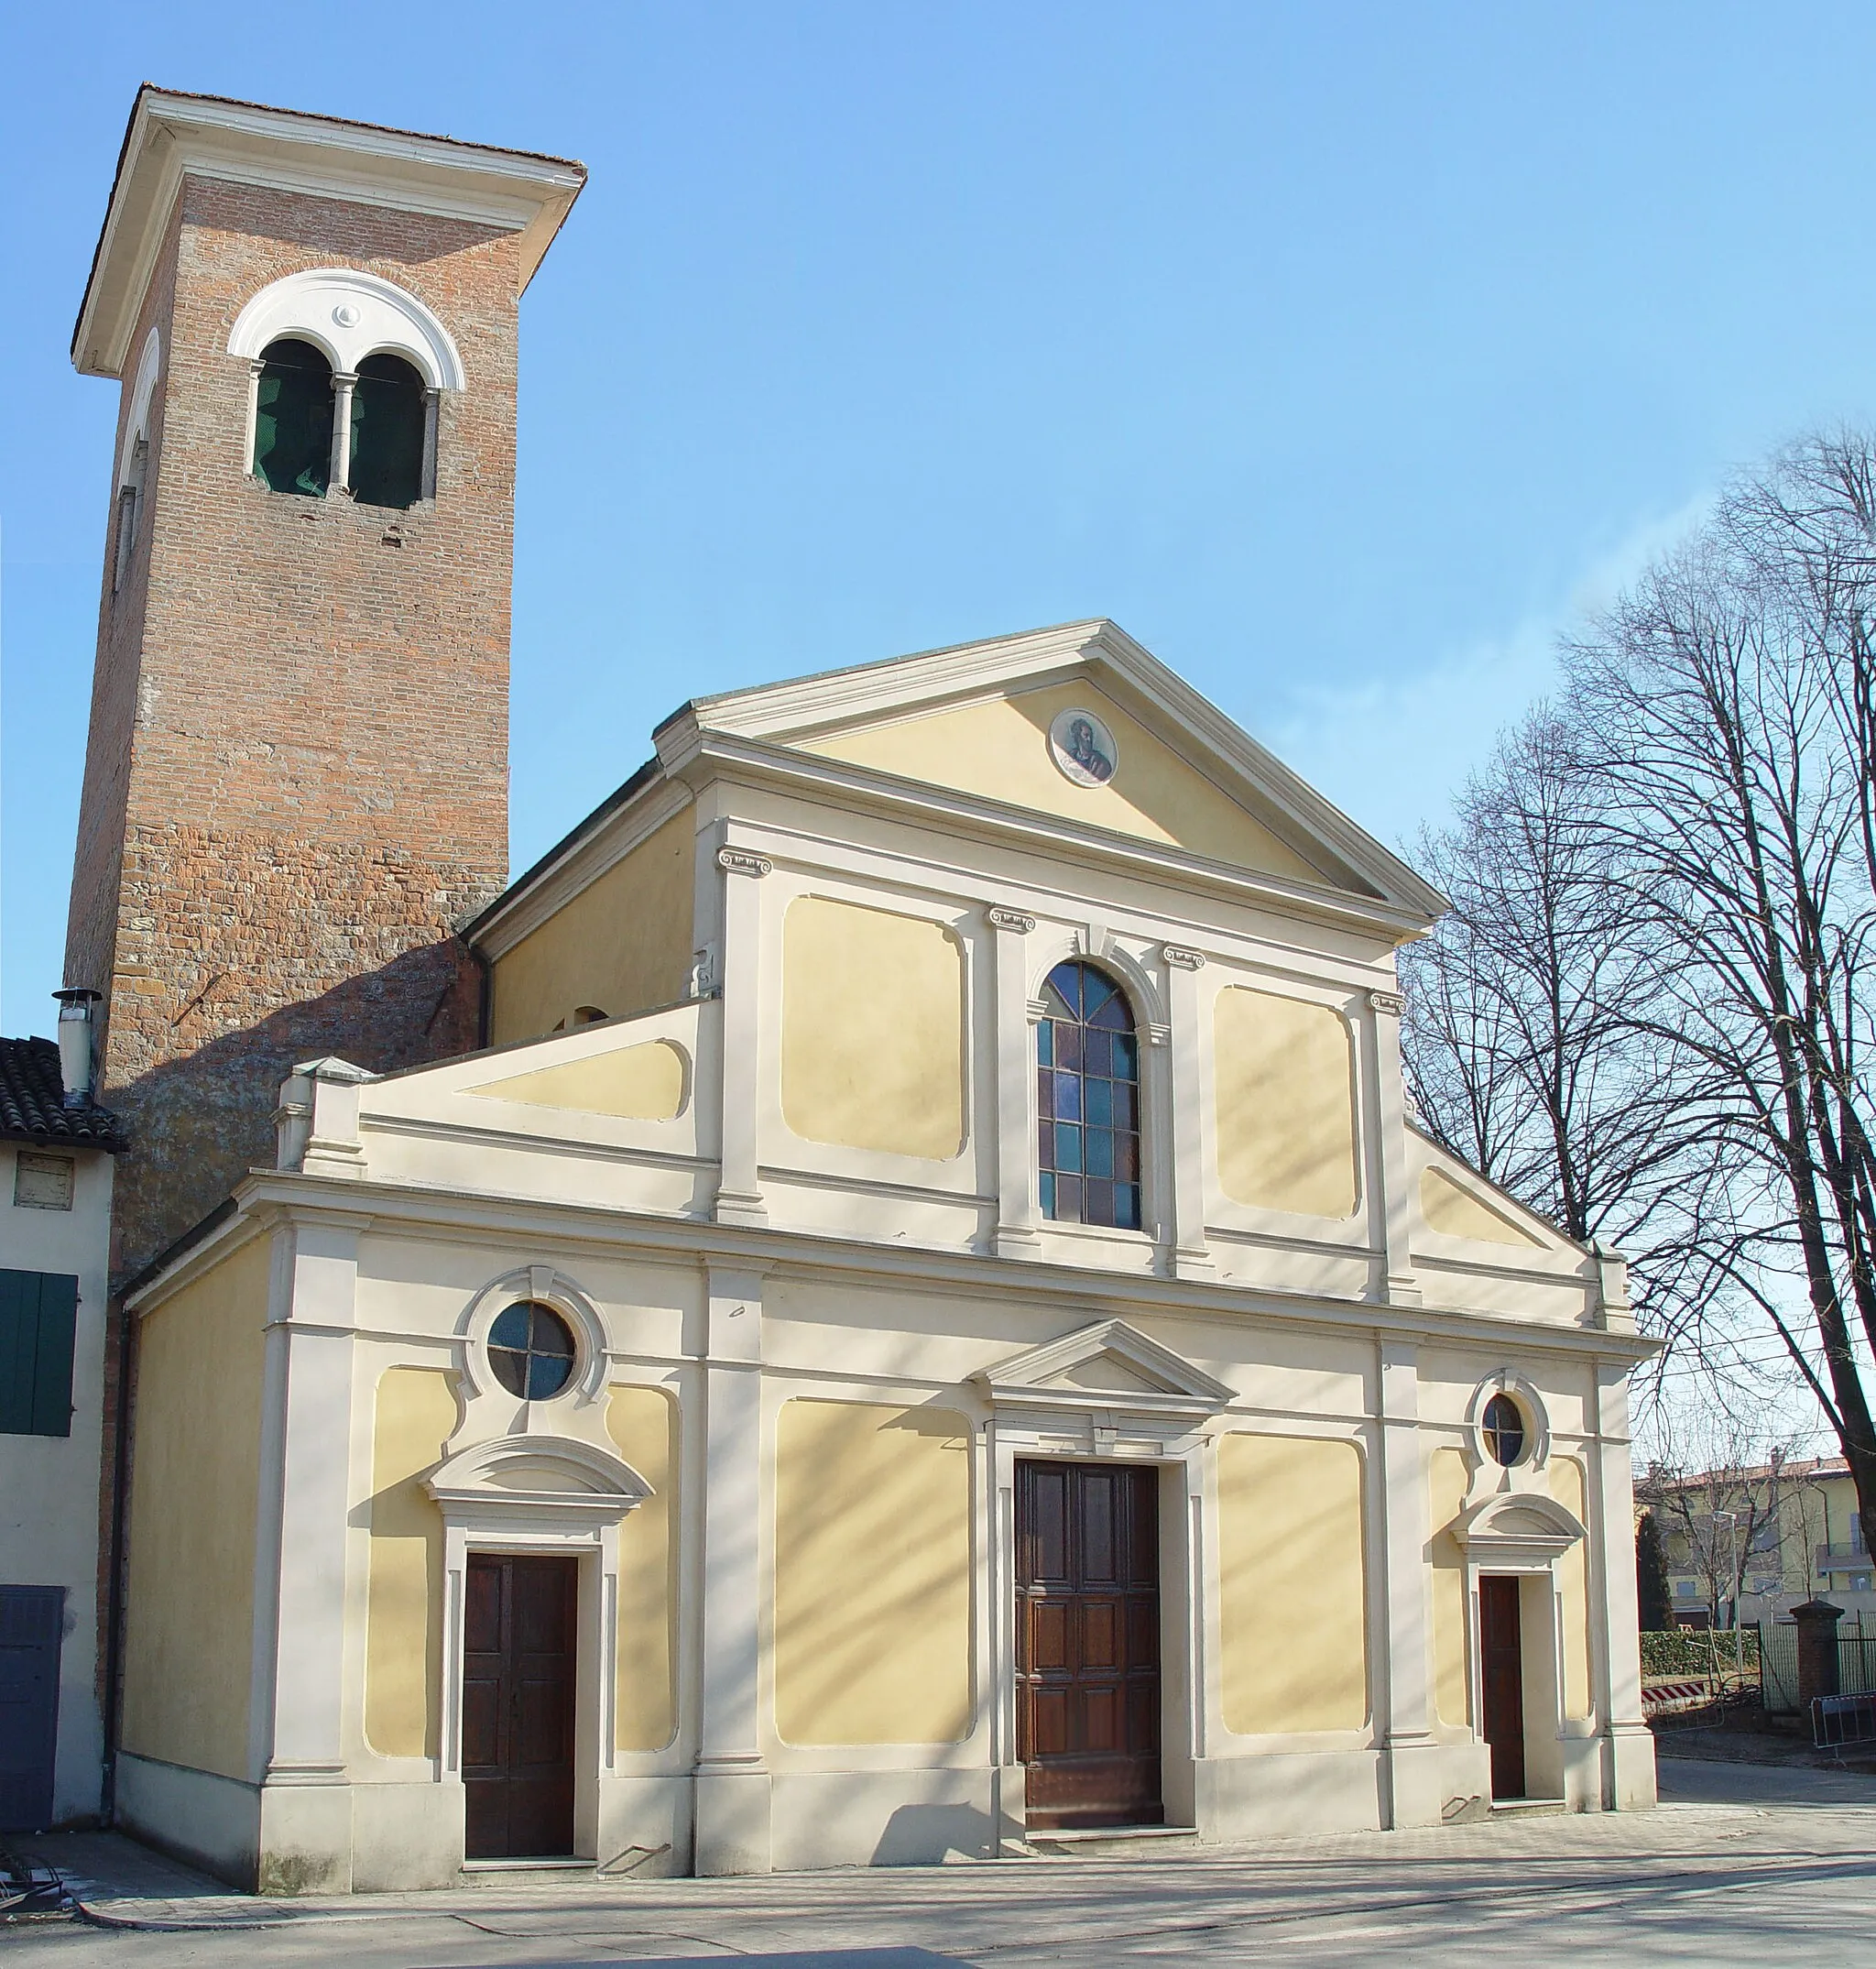 Photo showing: Description
Chiesa di Baganzola, Parma - Italy.
Date
February 11, 2006
Location
Baganzola - Parma - Italy
Photographer
Franco Folini